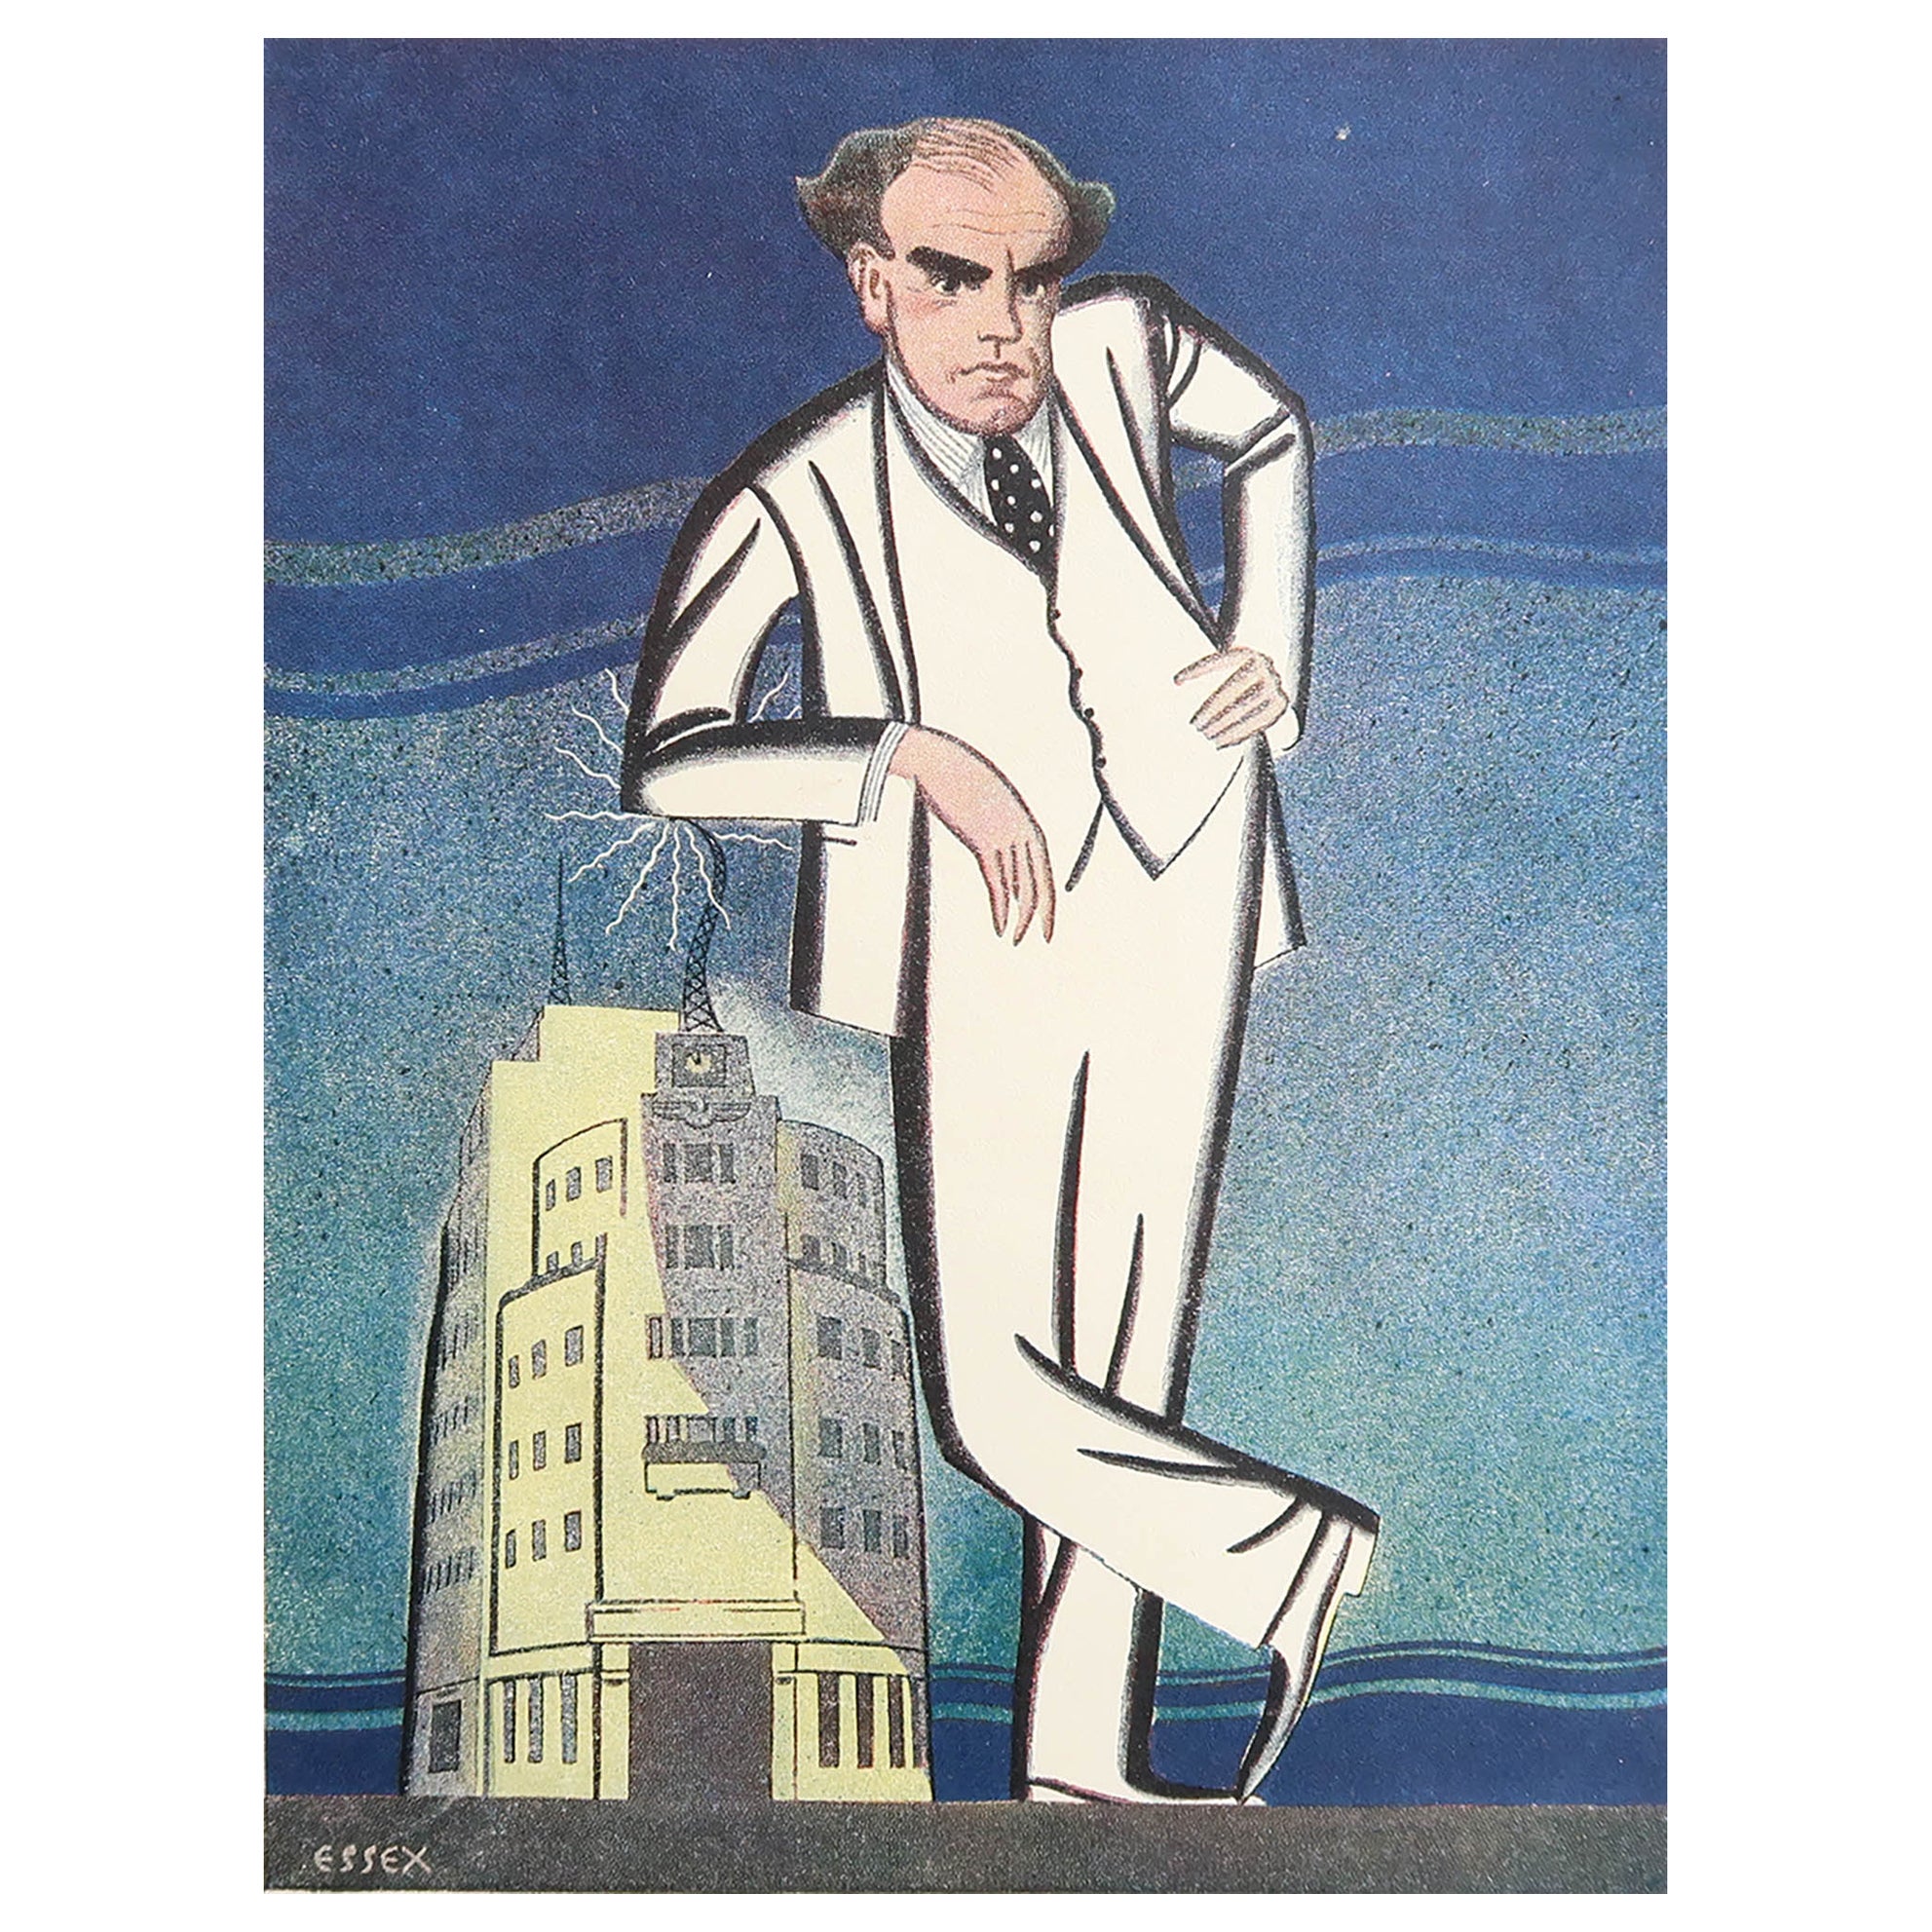 Original Vintage-Karikaturdruck des Generaldirektors der BBC im Vintage-Stil. 1934